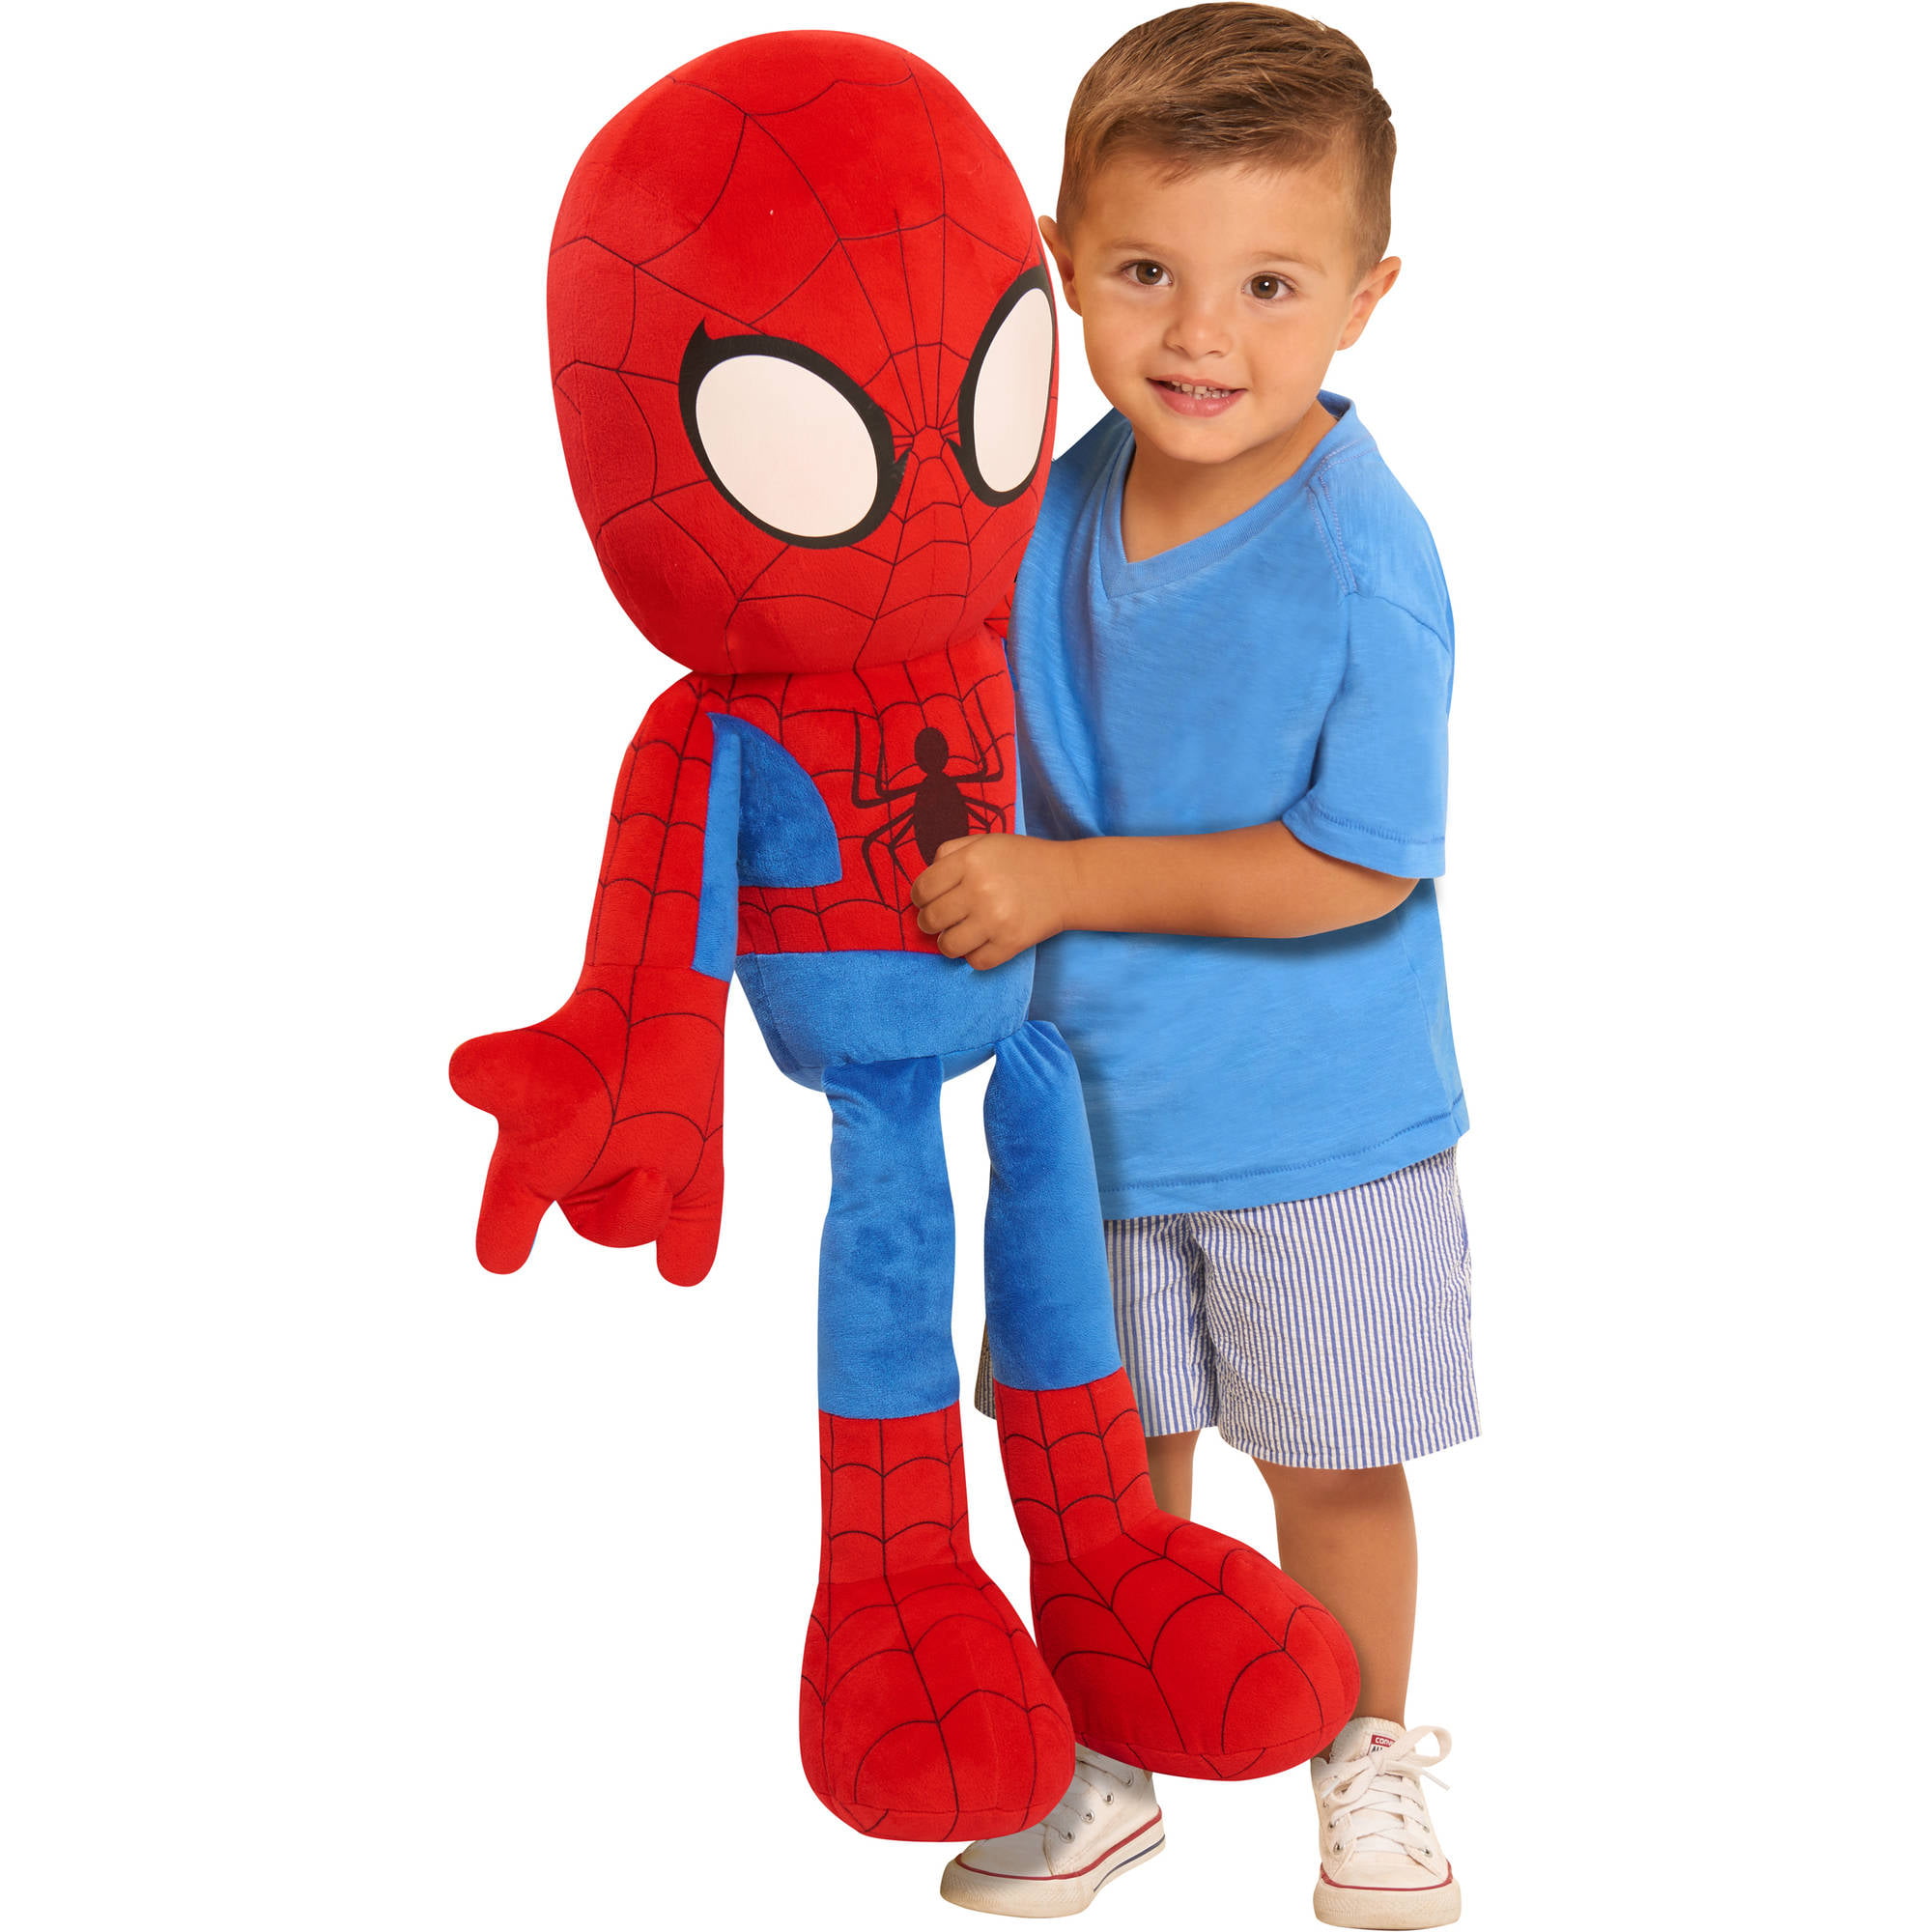 Spider-Man Giant Plush - Walmart.com 